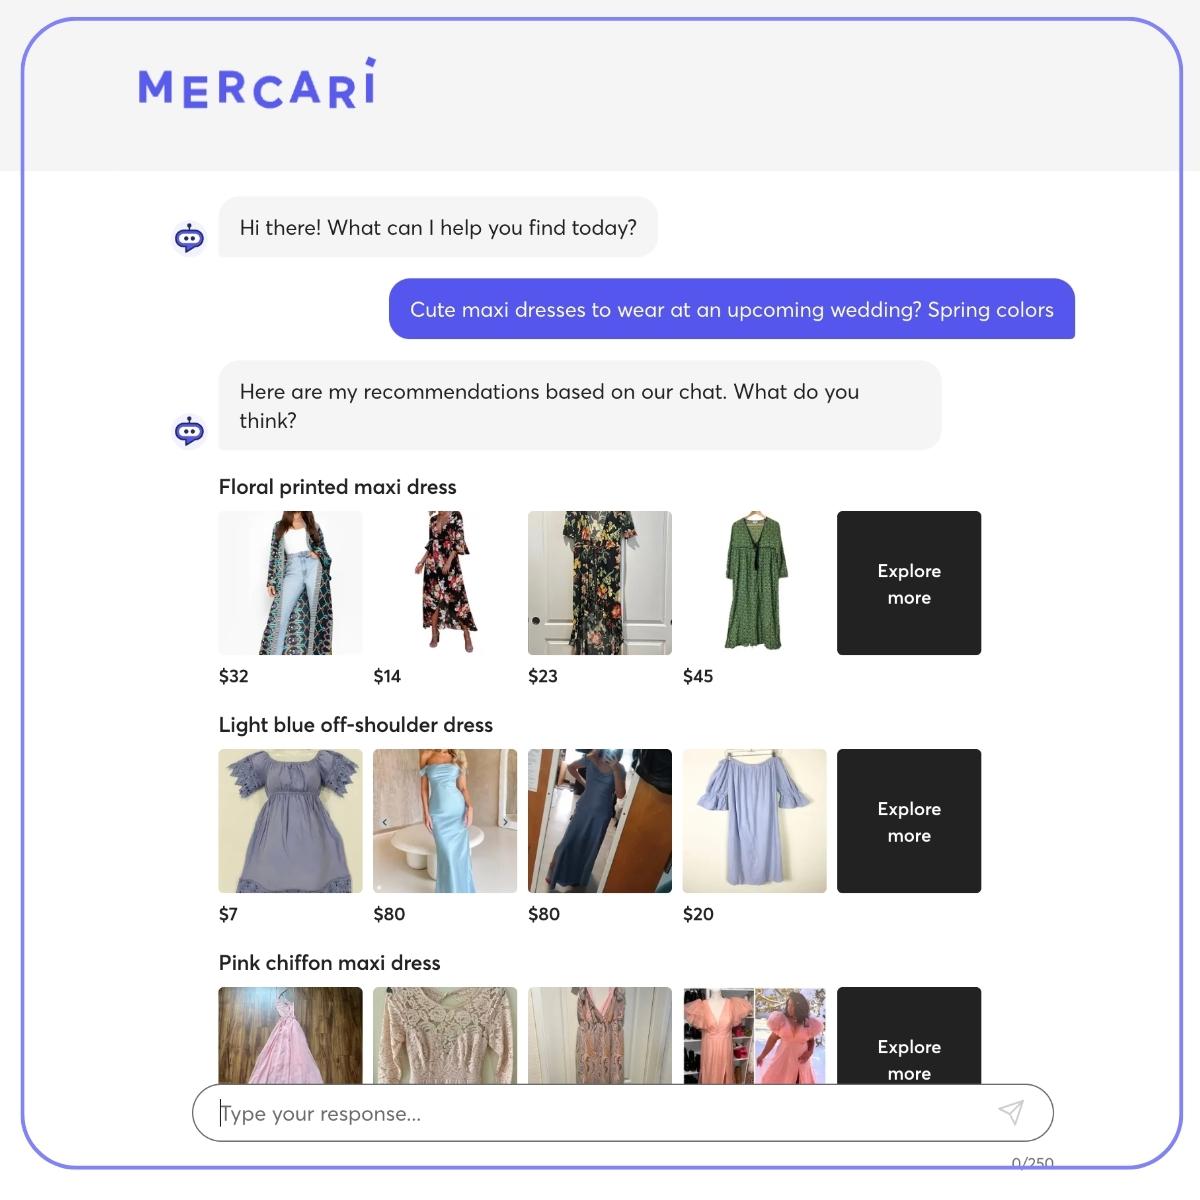 Mercari Merchat AI chat example